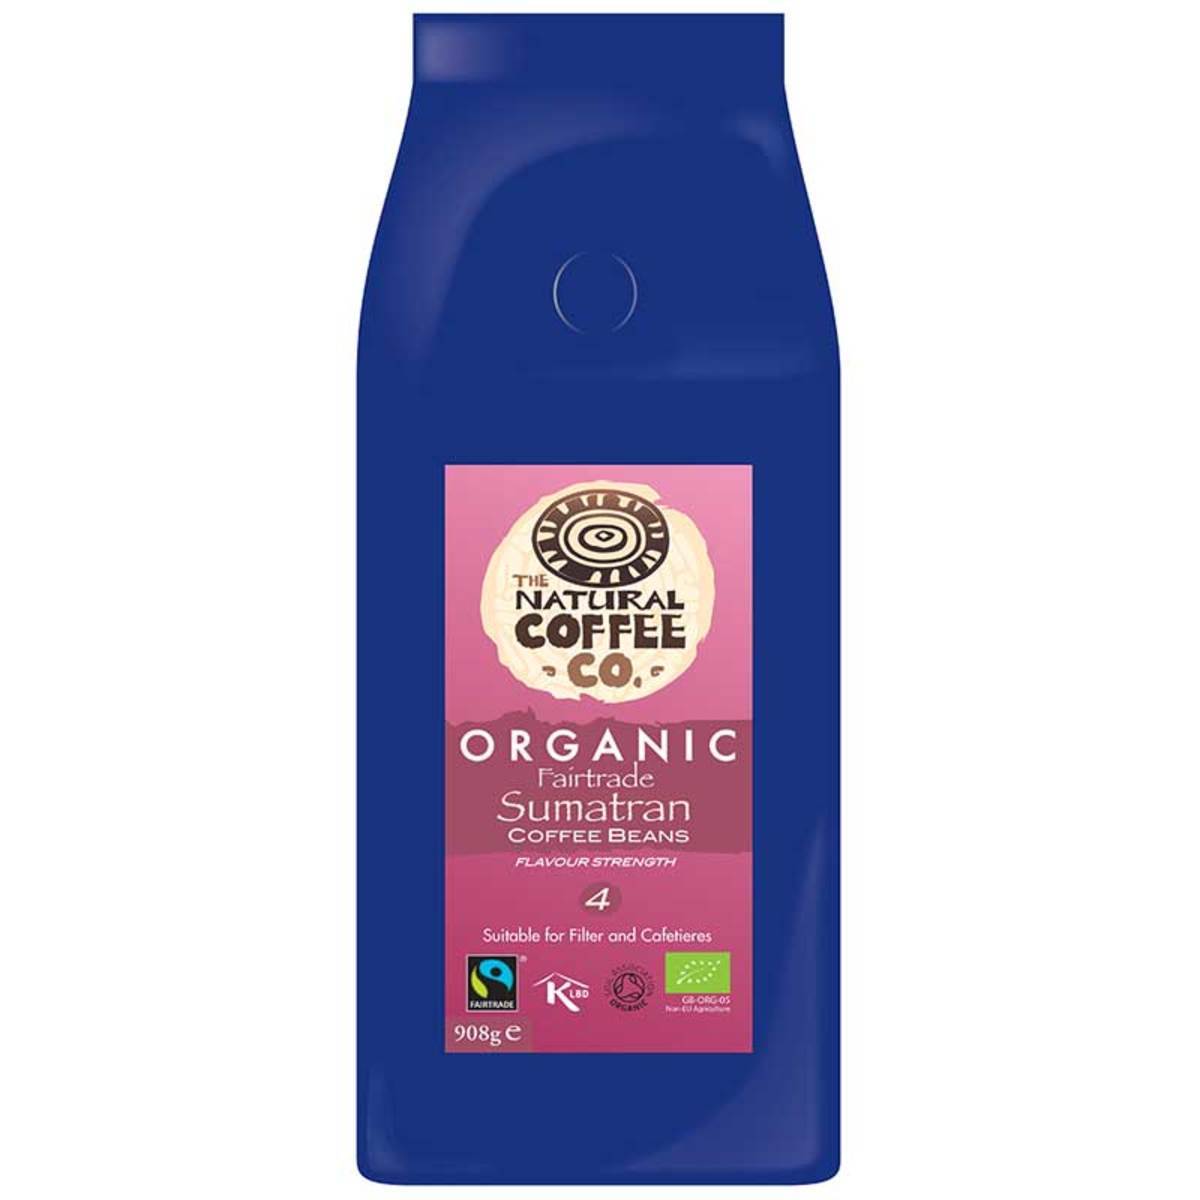 The Natural Coffee Co. Organic Sumatran Whole Bean Coffee, 908g